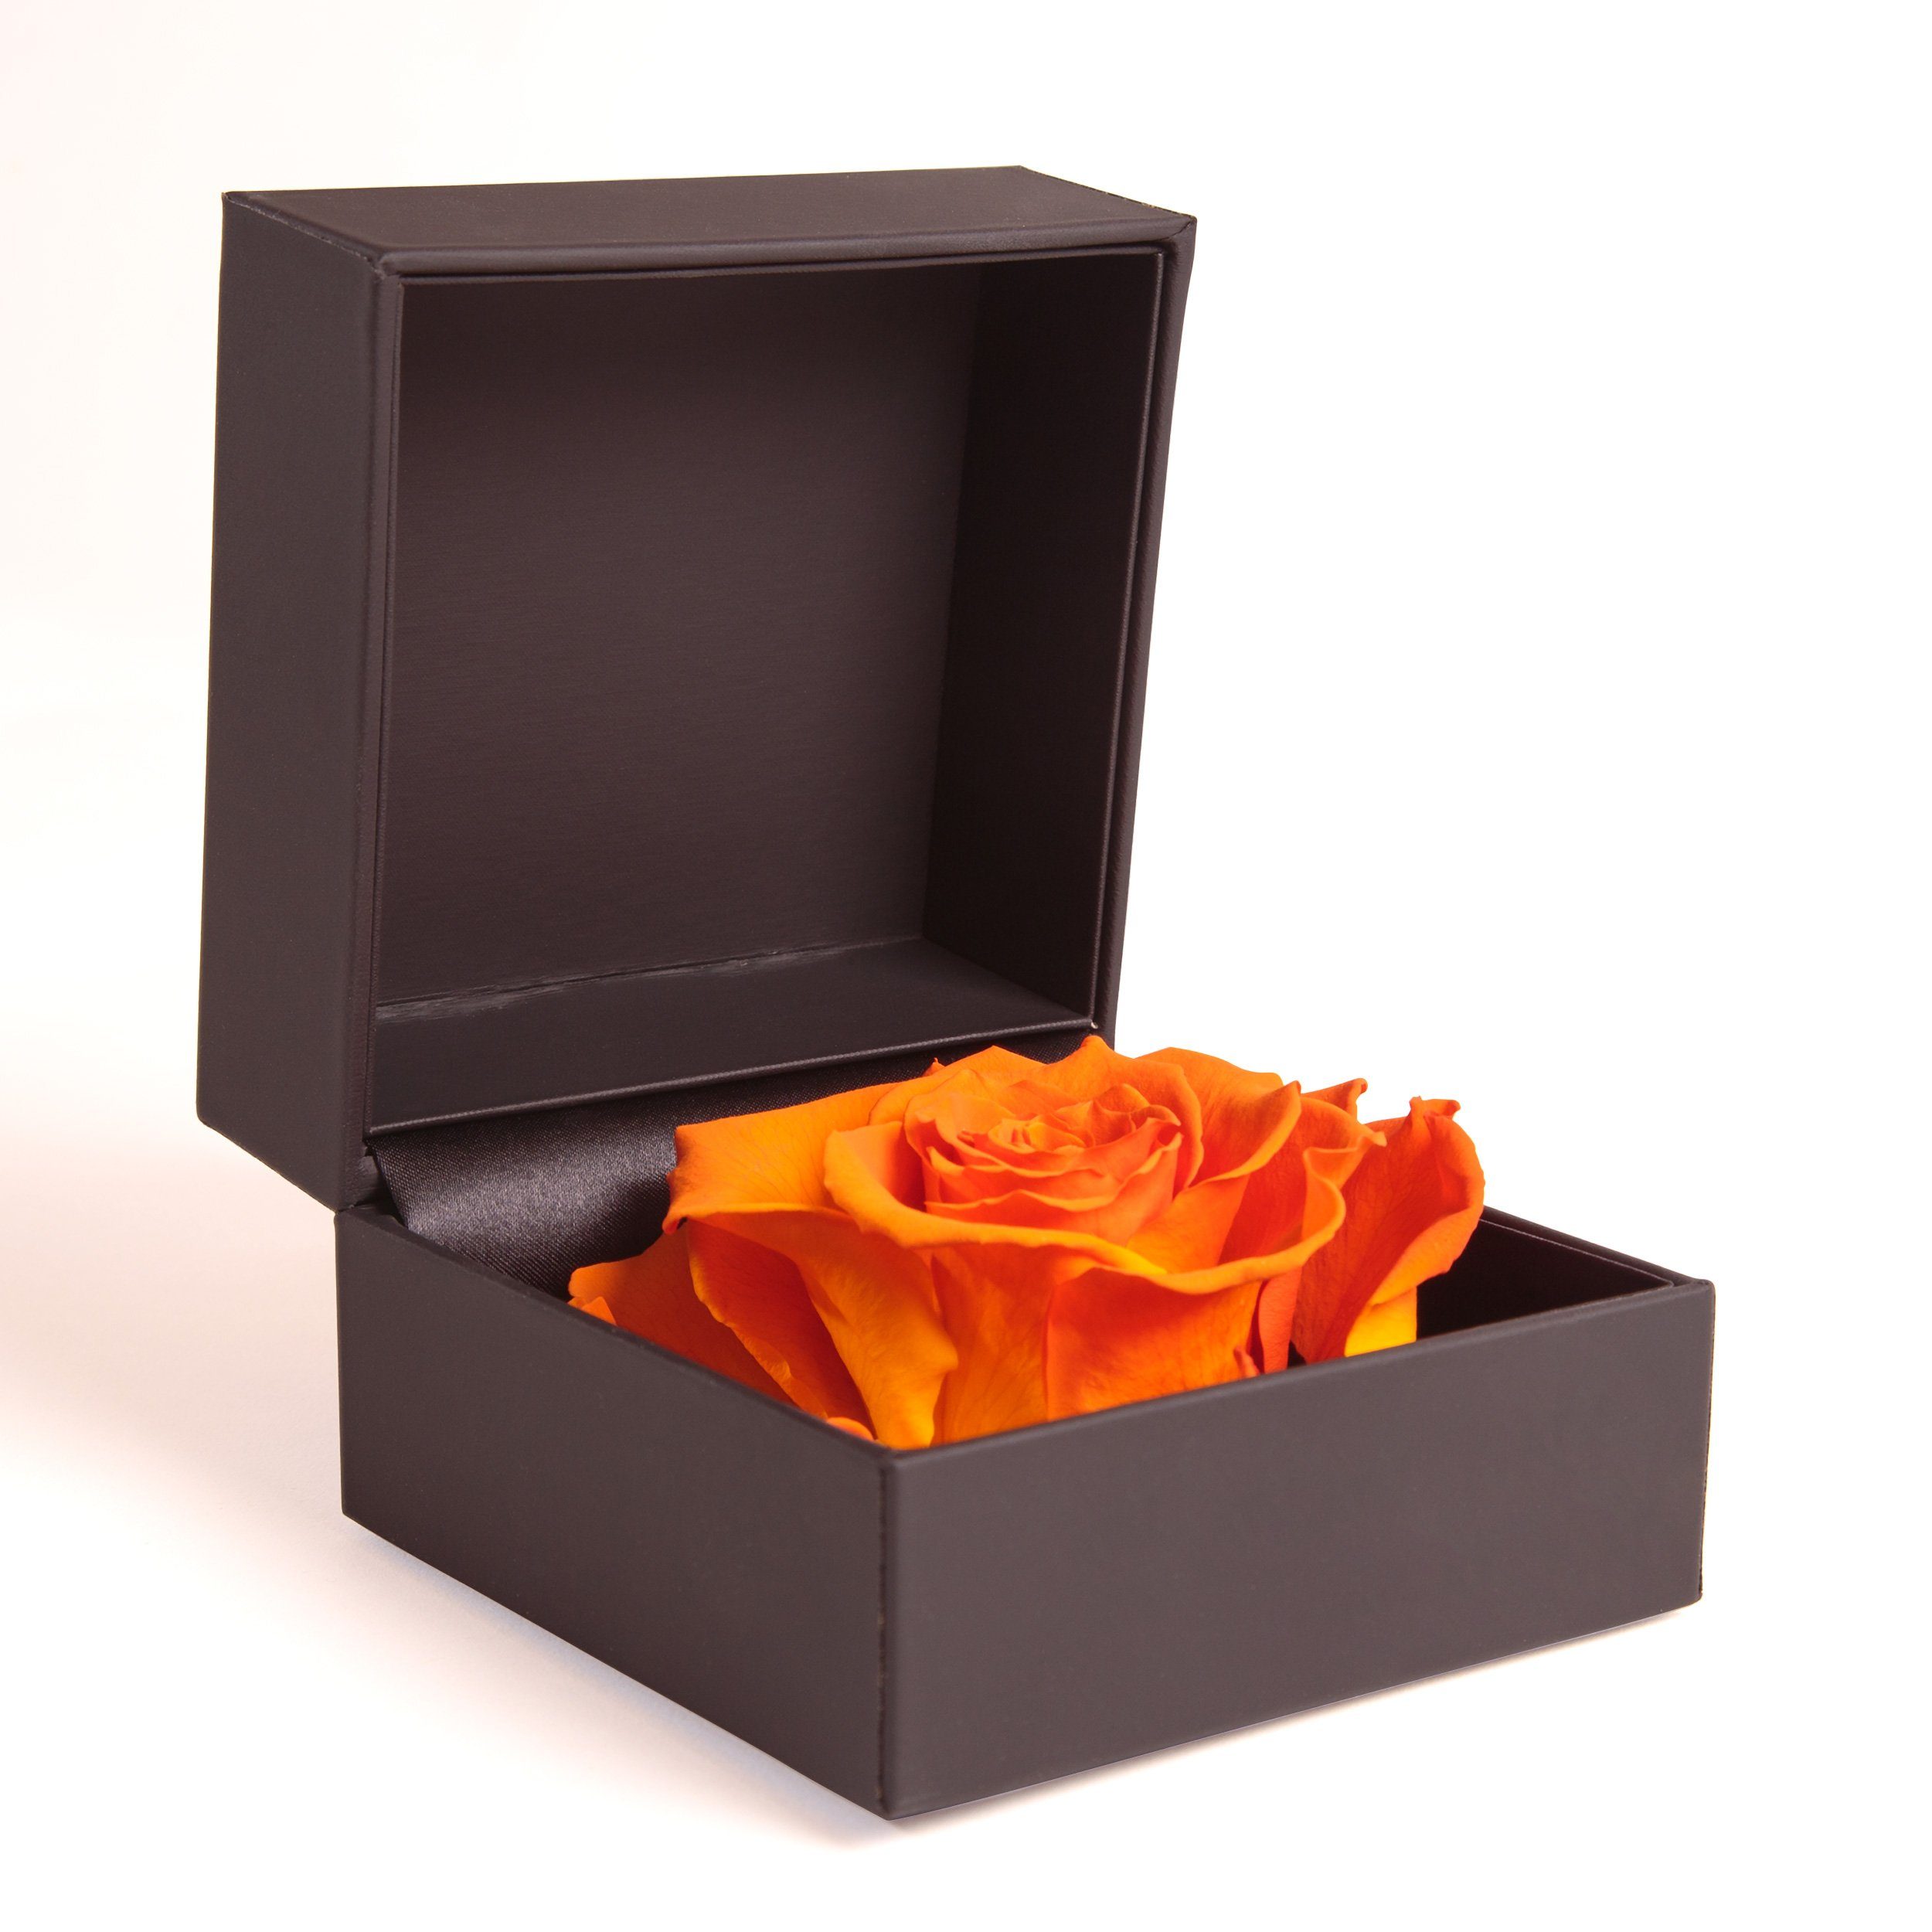 cm, Höhe SCHULZ Orange Kunstblume Heidelberg, Groß Ringbox 9 Rose in ROSEMARIE Box konserviert Langlebige Infinity Rose, Rosenbox Rose Ringdose